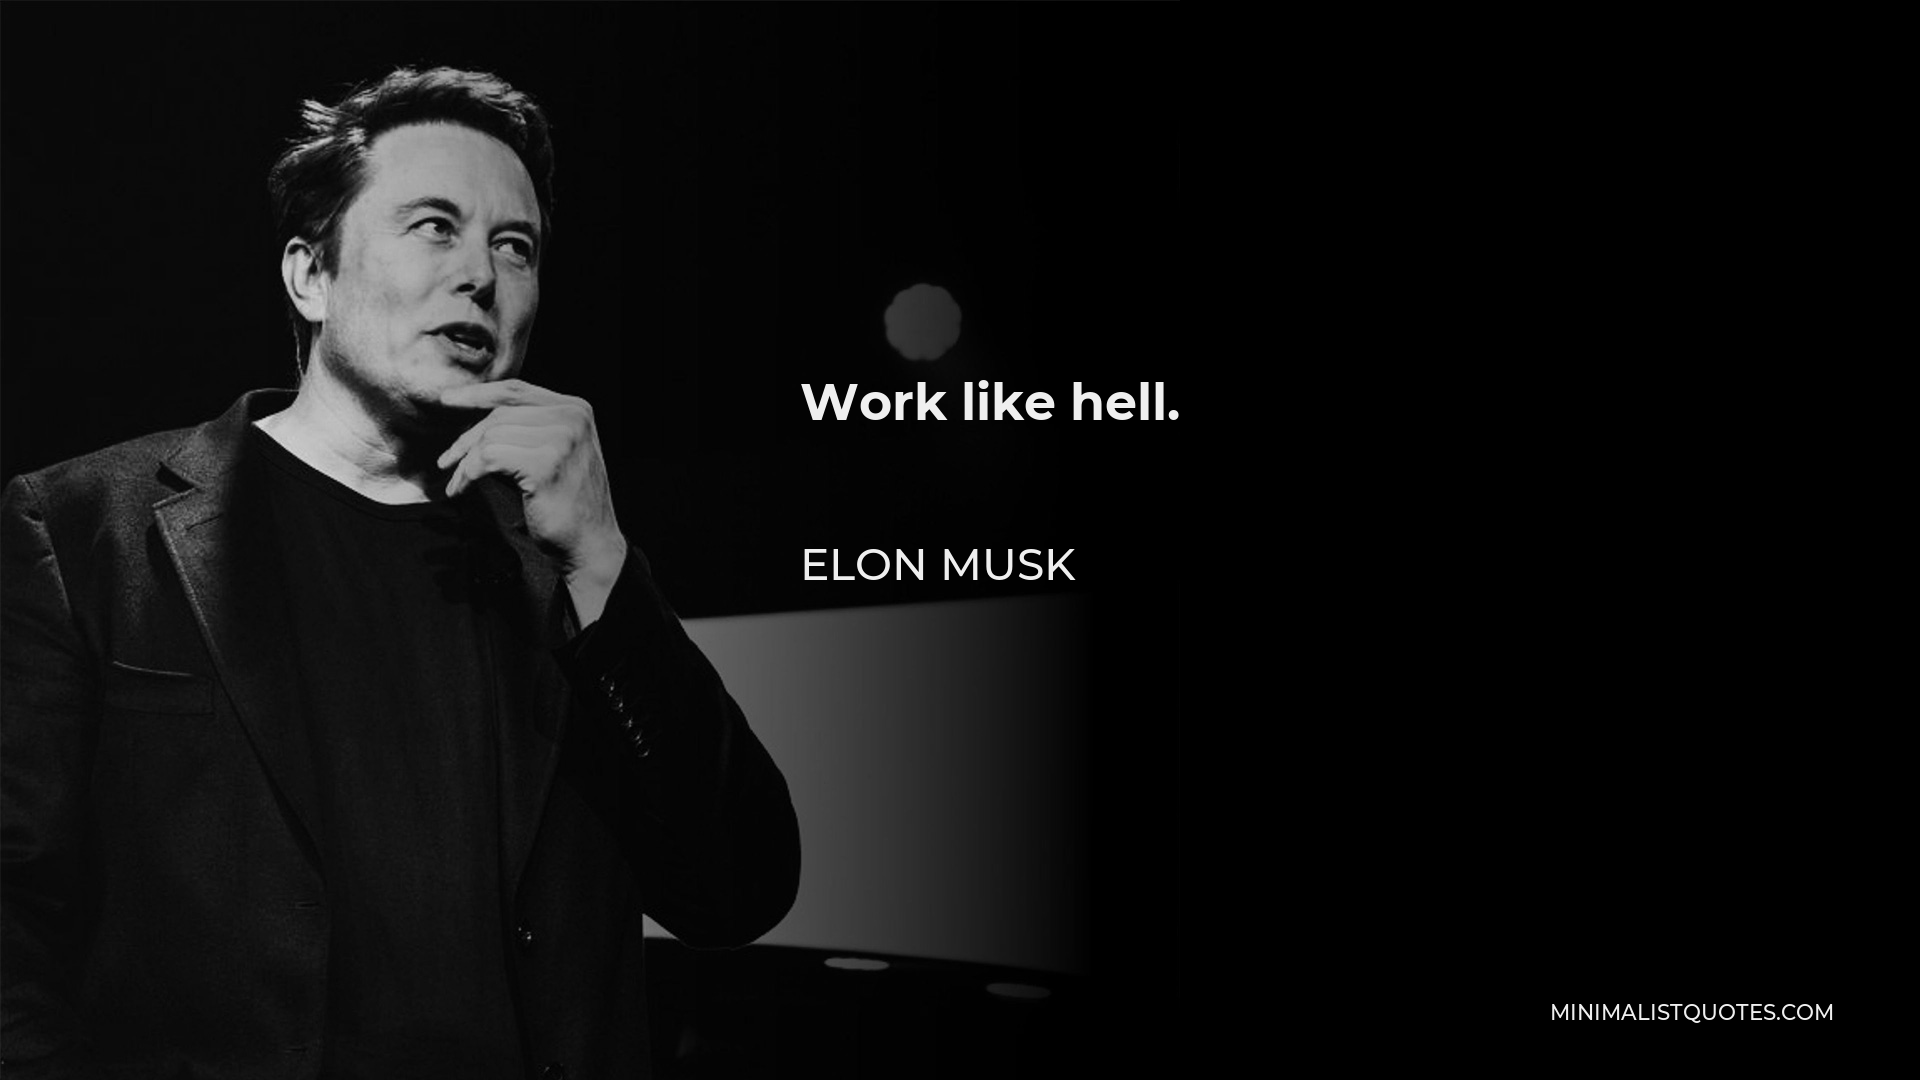 Premium AI Image | Elon Musk Celebrating With Diwali Wallpaper